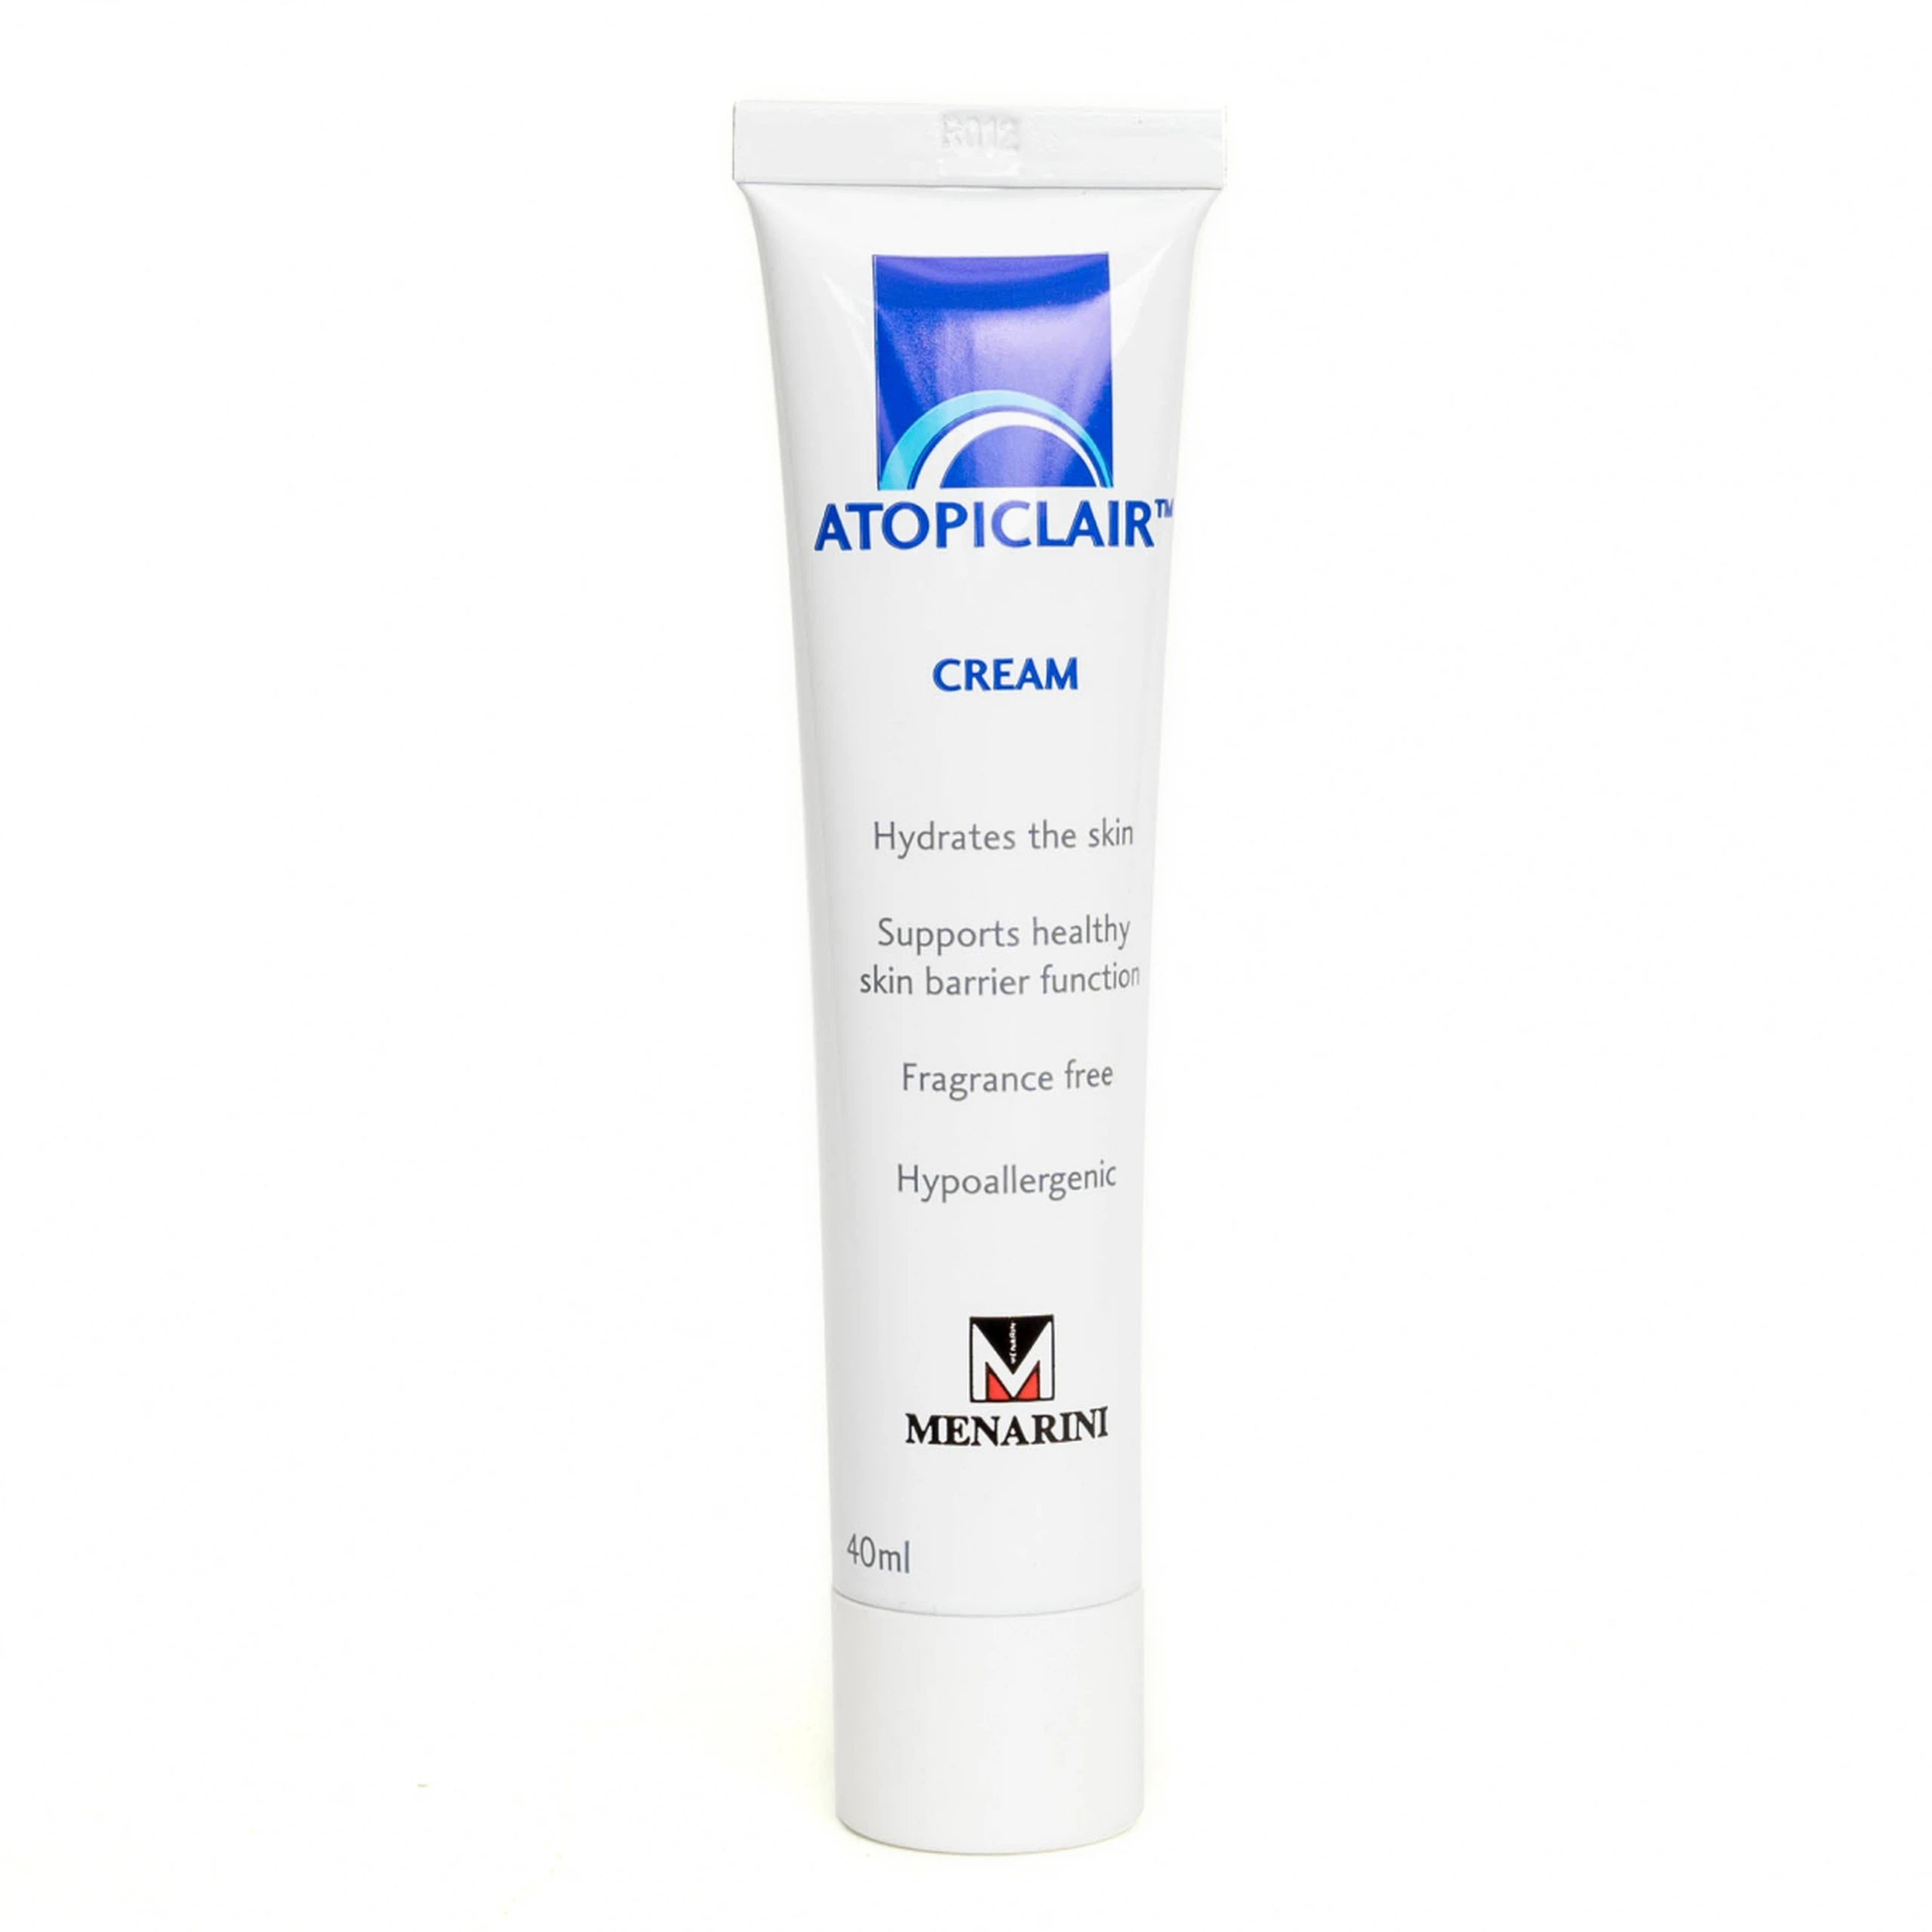 Kem Atopiclair Cream Menarini giảm ngứa, rát, đau do viêm da cơ địa, viêm da tiếp xúc (40ml)